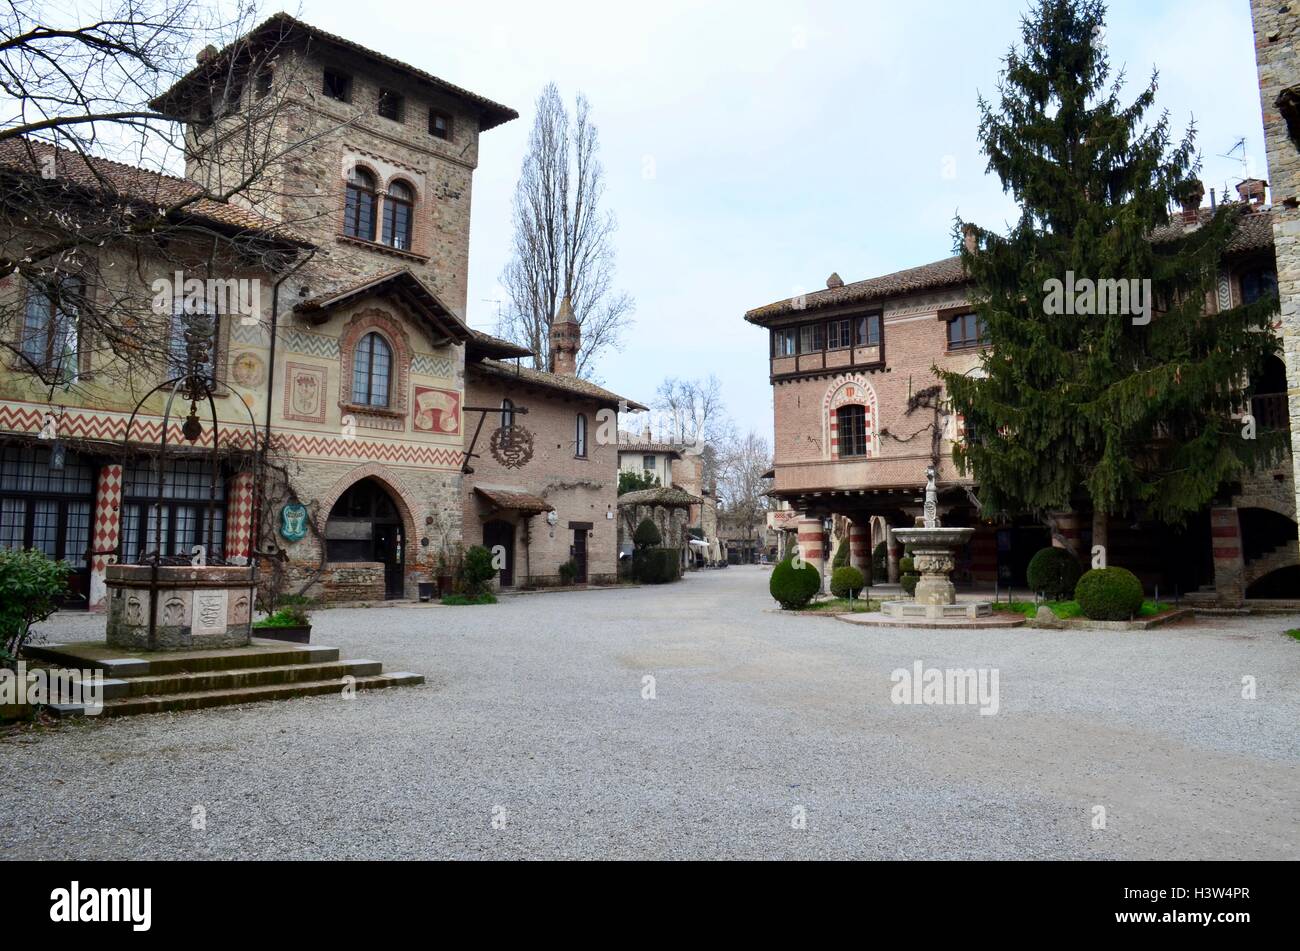 Scene in the town of Vigolzone, Italy Stock Photo